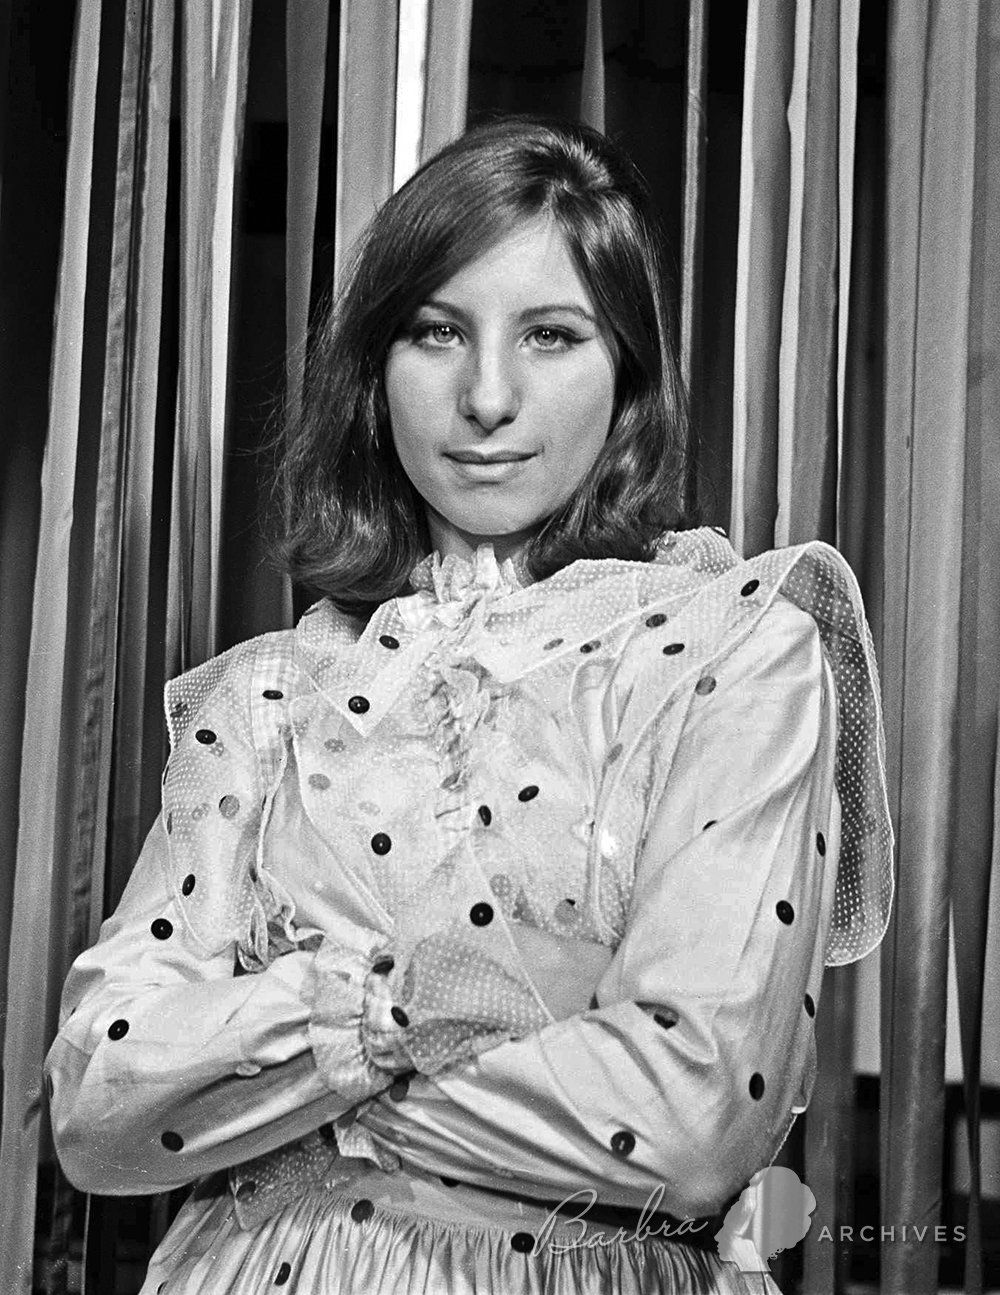 Barbra Streisand in publicity photo for Harry Stoones.